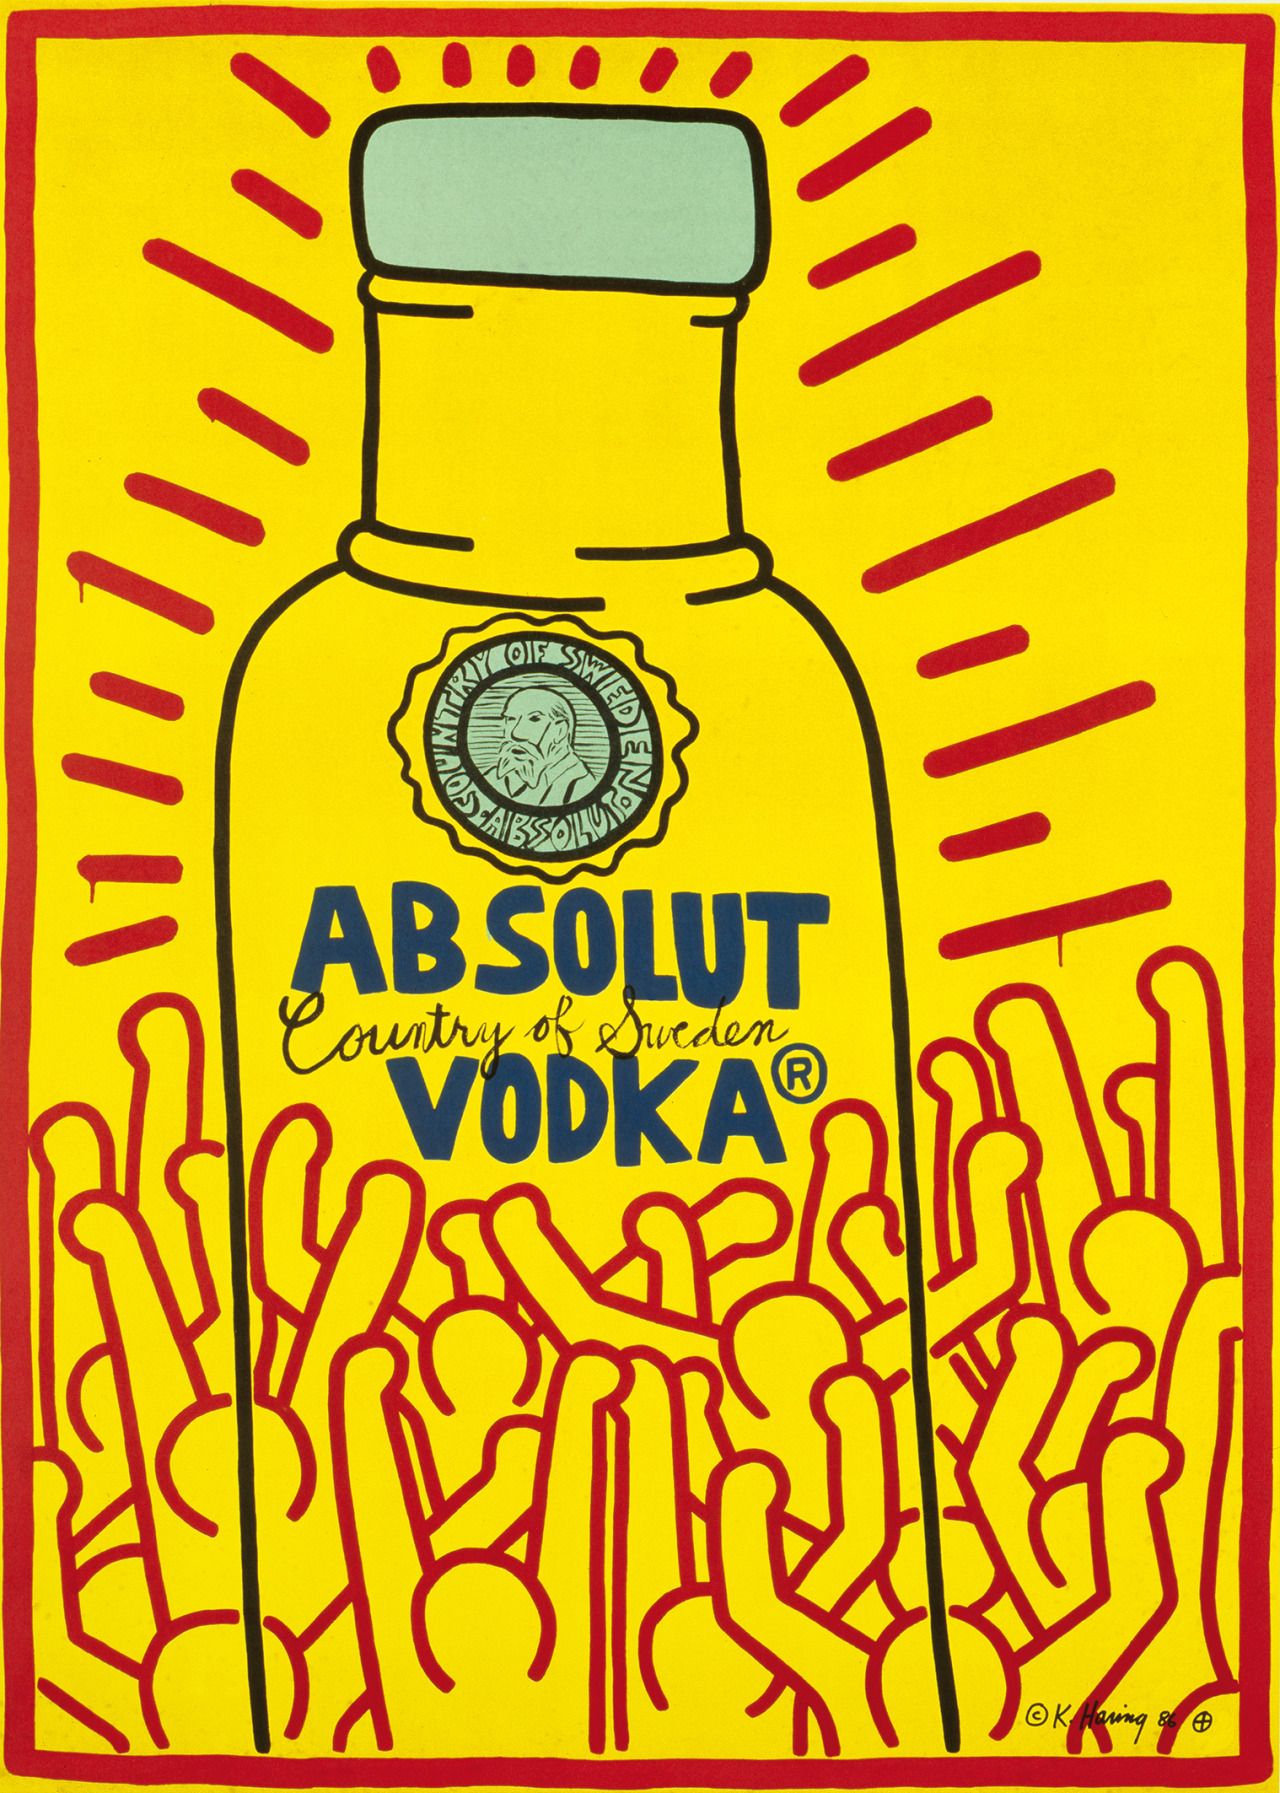 art absolut vodka x Andy Warhol KEITH .rebloggy.com